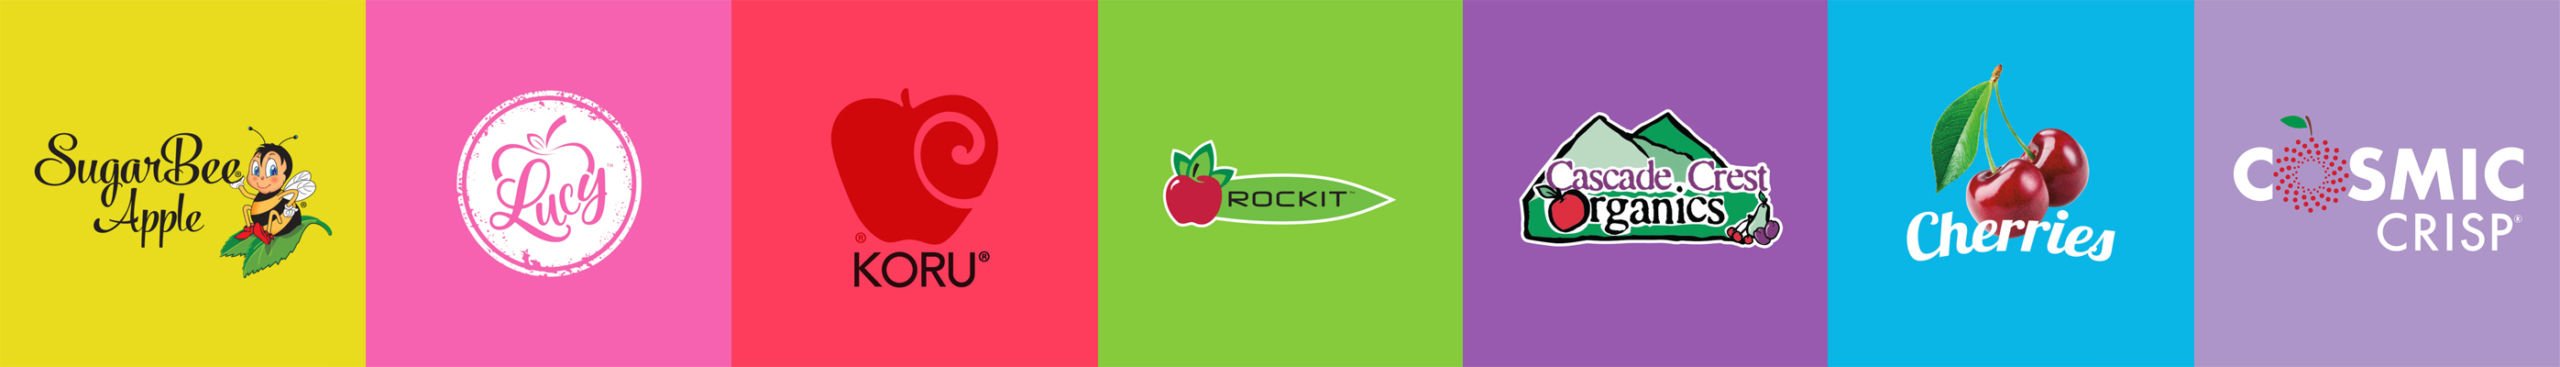 what are the best apple brands? rockit apple, cascade crest organics, honeycrisp apple, sugarbee apple, lucy apple